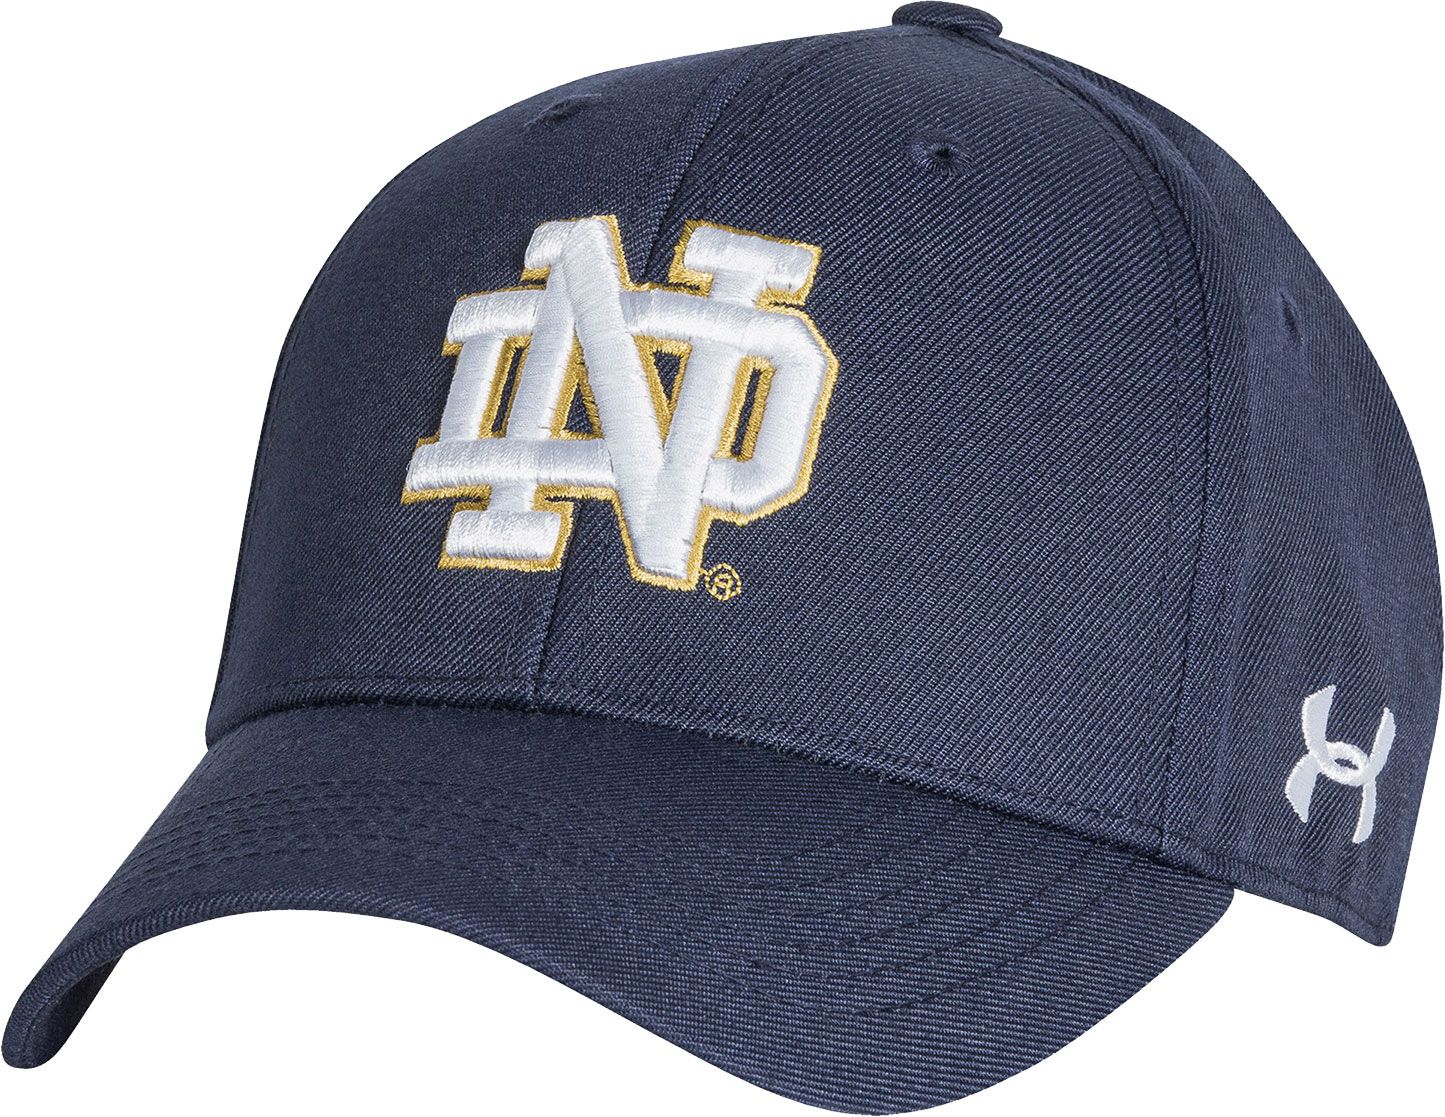 Under Armour / Men's Notre Dame Fighting Irish Navy Adjustable Hat